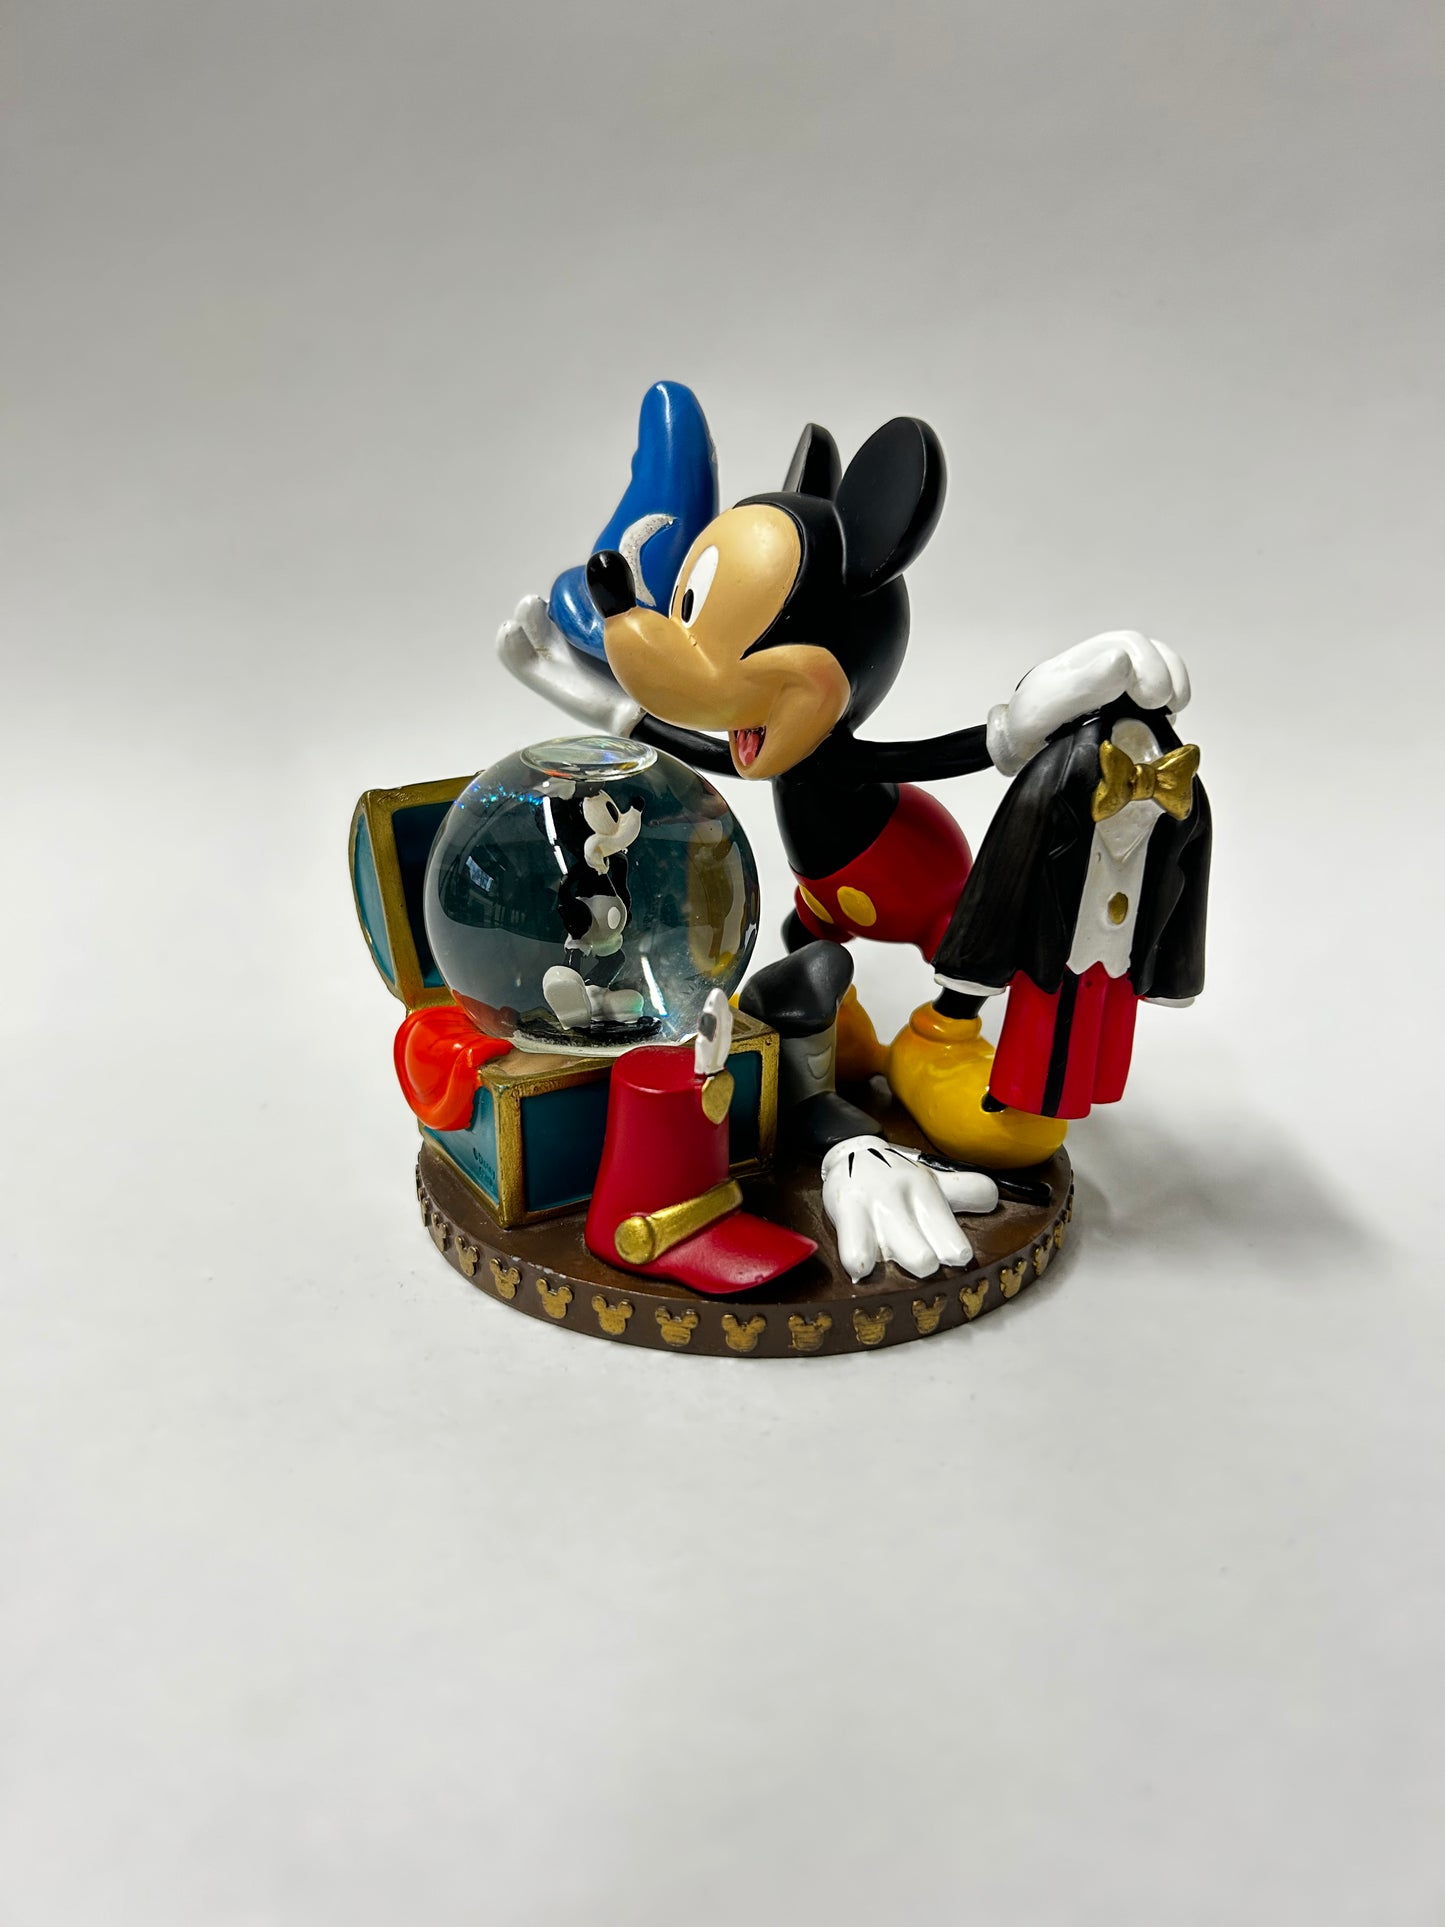 Mickey-Mouse-Globus-Bild